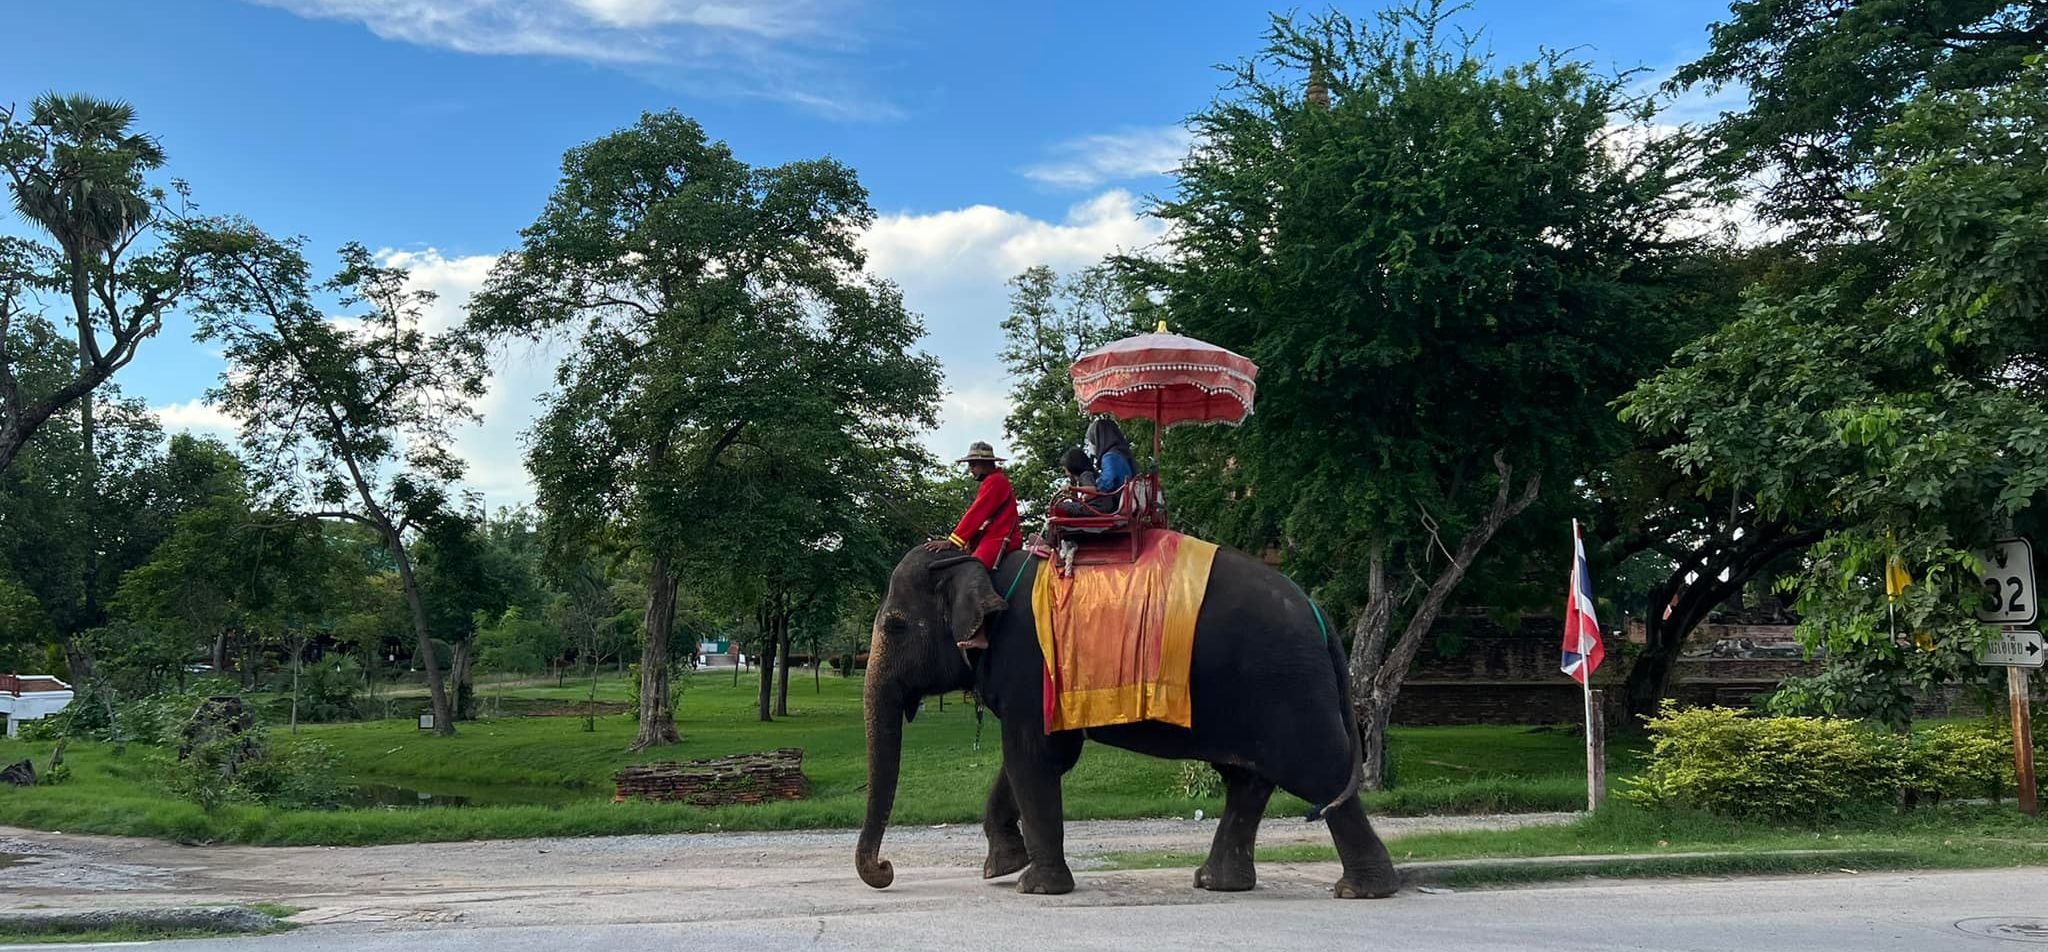 Elephants at Ayutthaya Historical Park in Northern Thailand